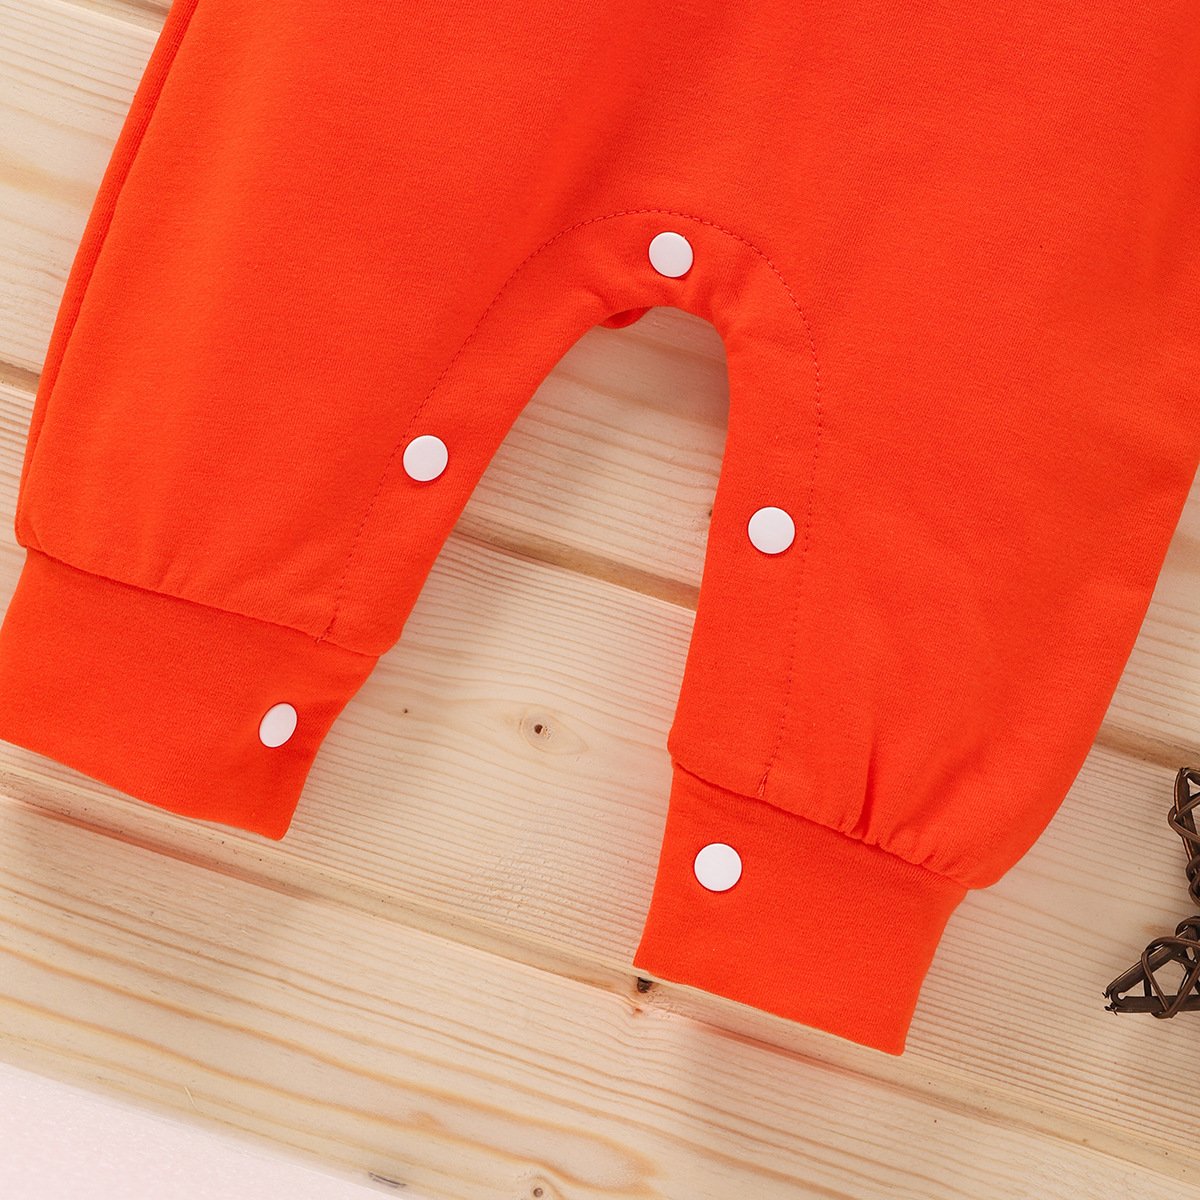 Baby Girls Halloween Long Sleeve Pumpkin Romper wholesale baby clothes usa